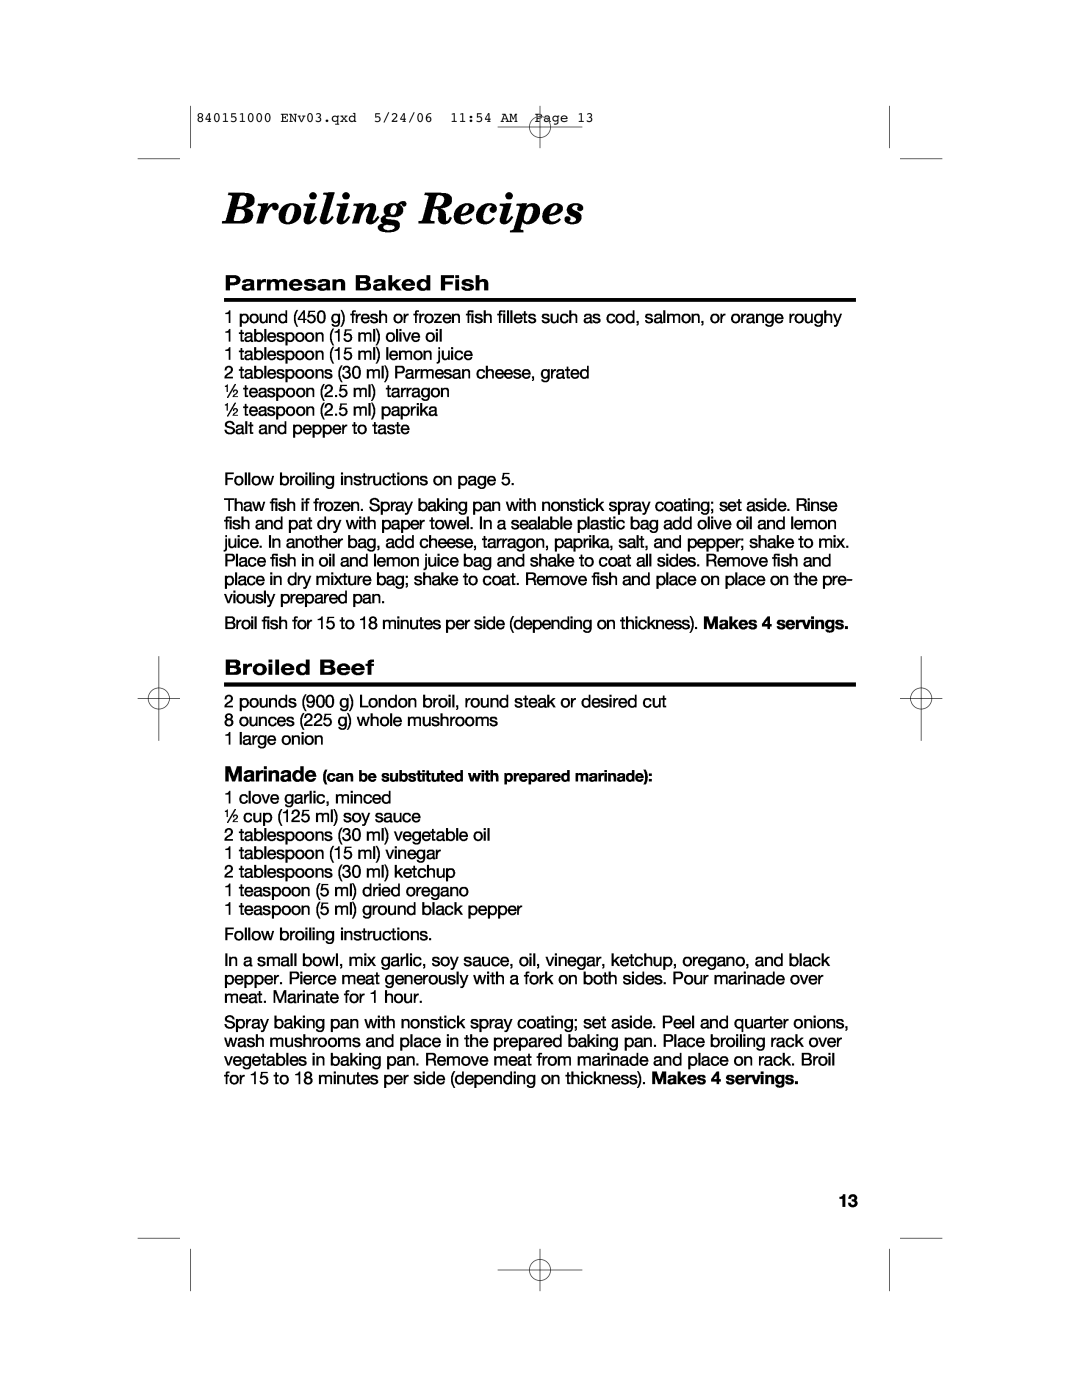 Hamilton Beach 840151000 manual Broiling Recipes, Parmesan Baked Fish, Broiled Beef 